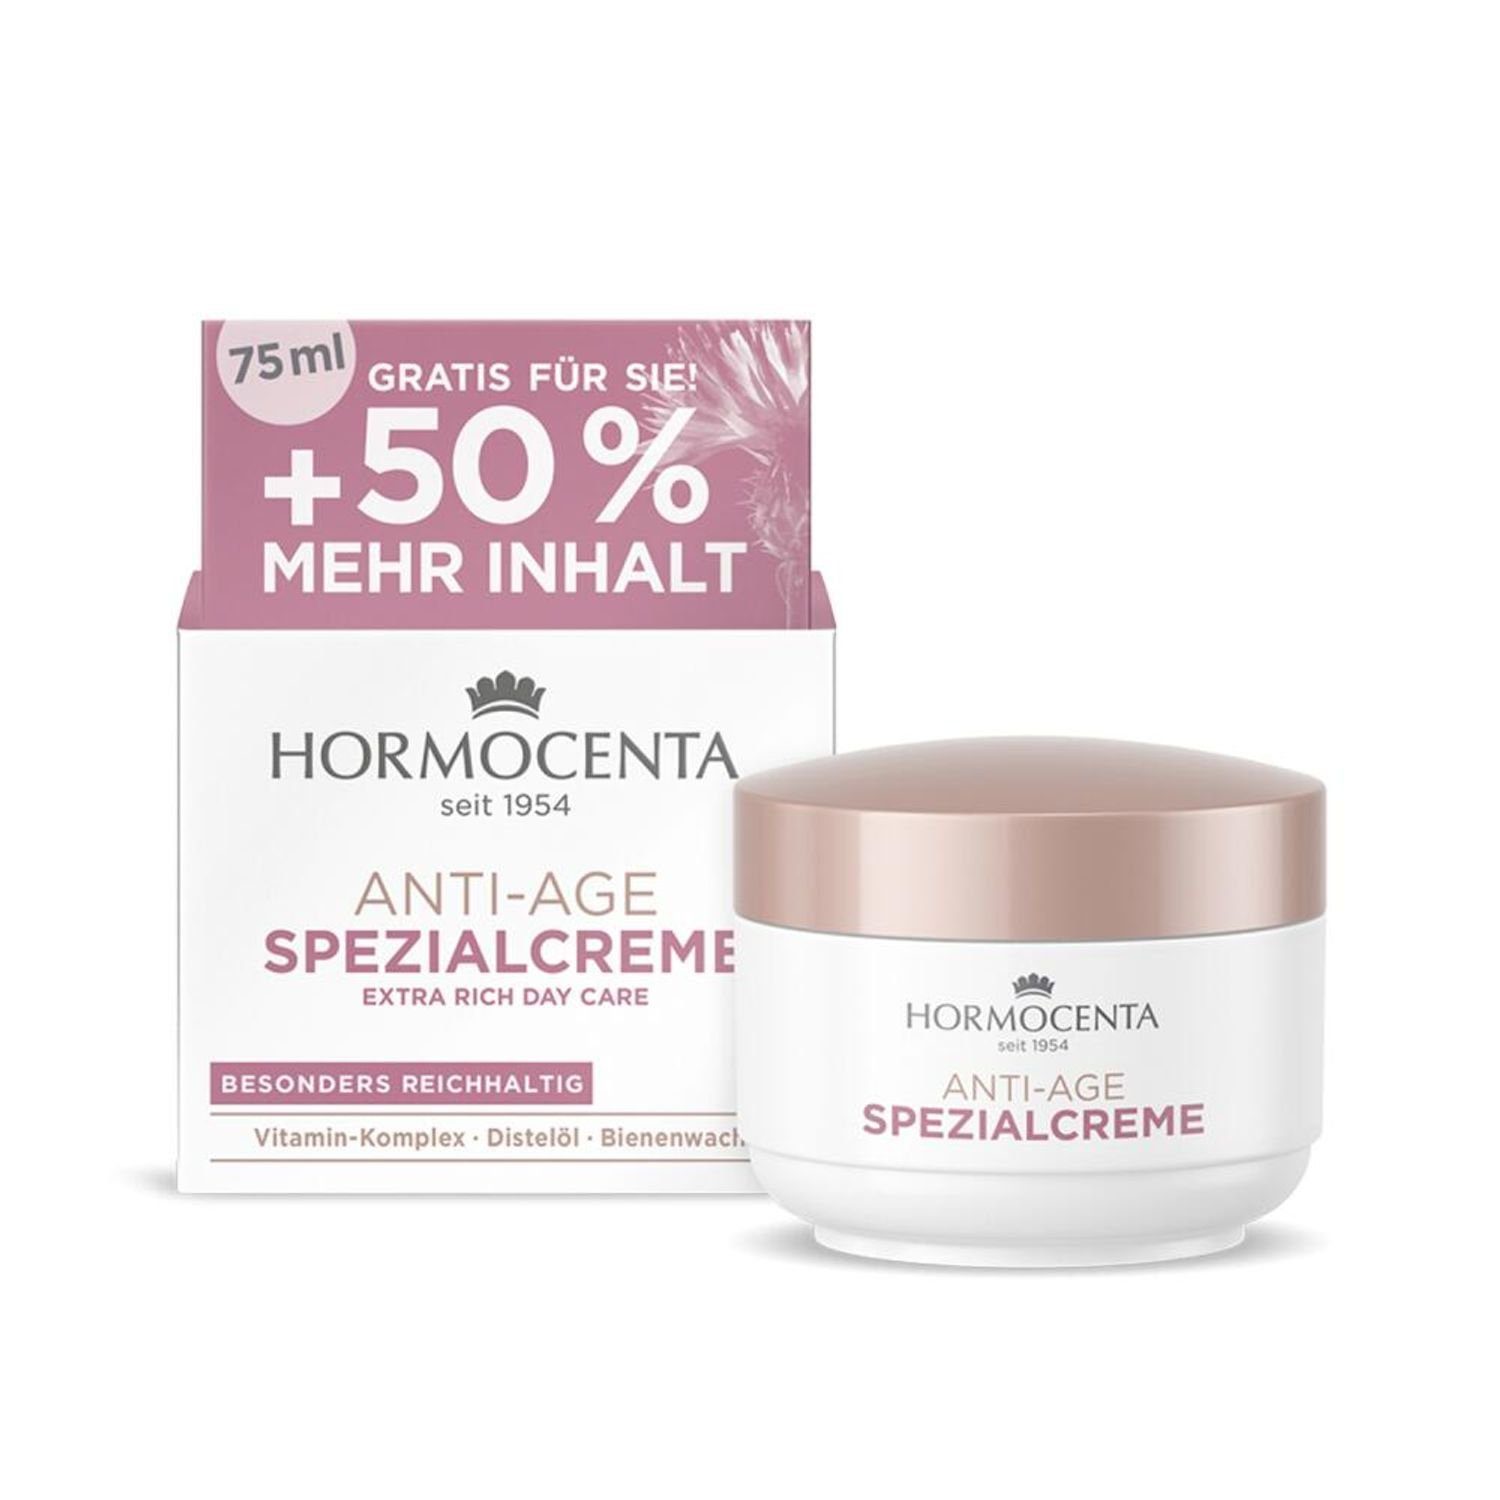 Hormocenta Kosmetik GmbH Körpercreme 6x Hormocenta 75ml Anti Age Spezialcreme Tagespflege Nachtlotion Haut